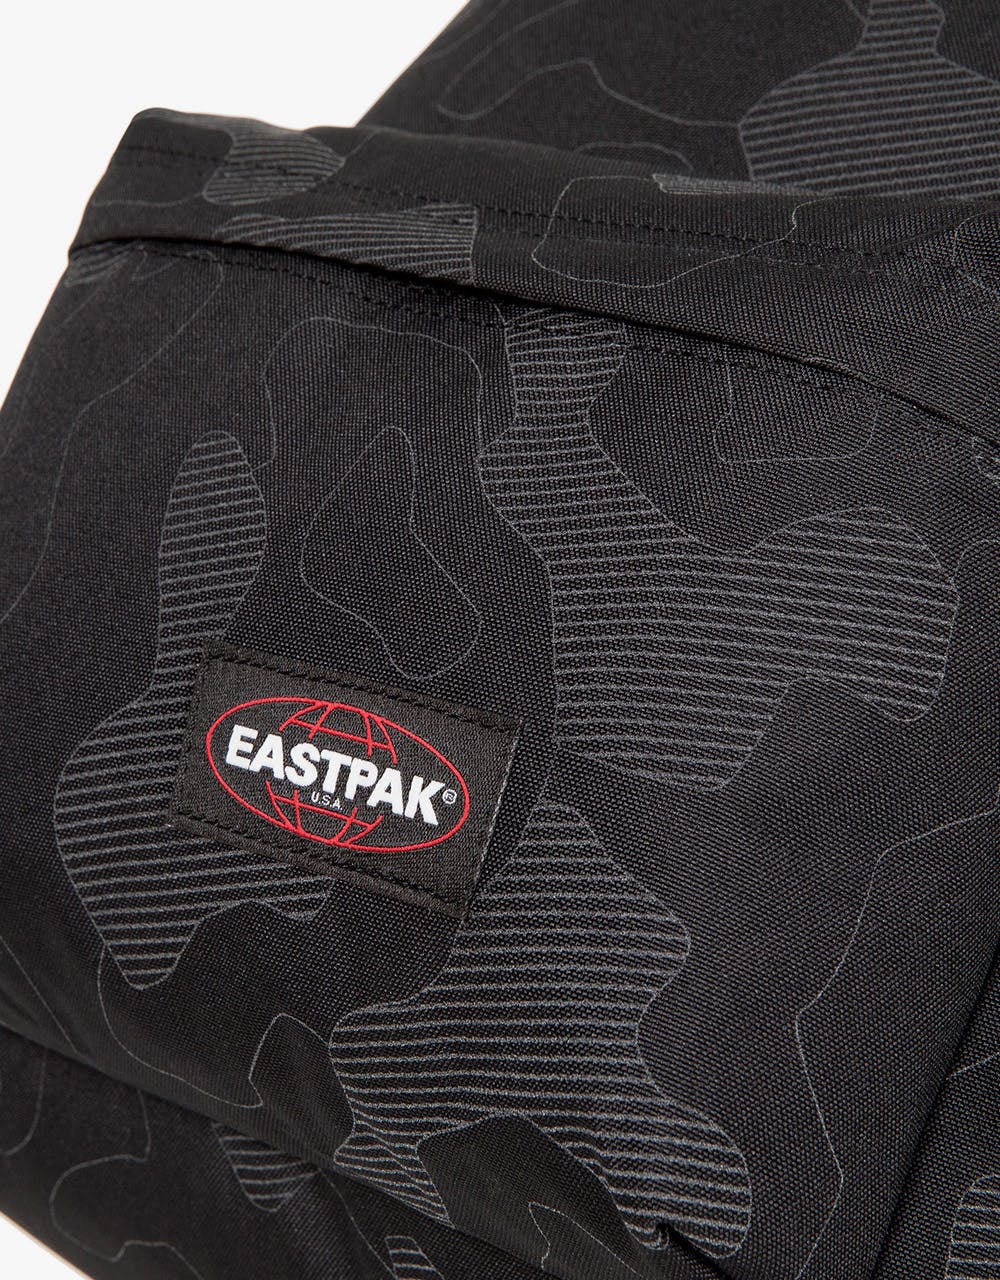 Eastpak Padded Pak'R Backpack - Reflective Camo Black